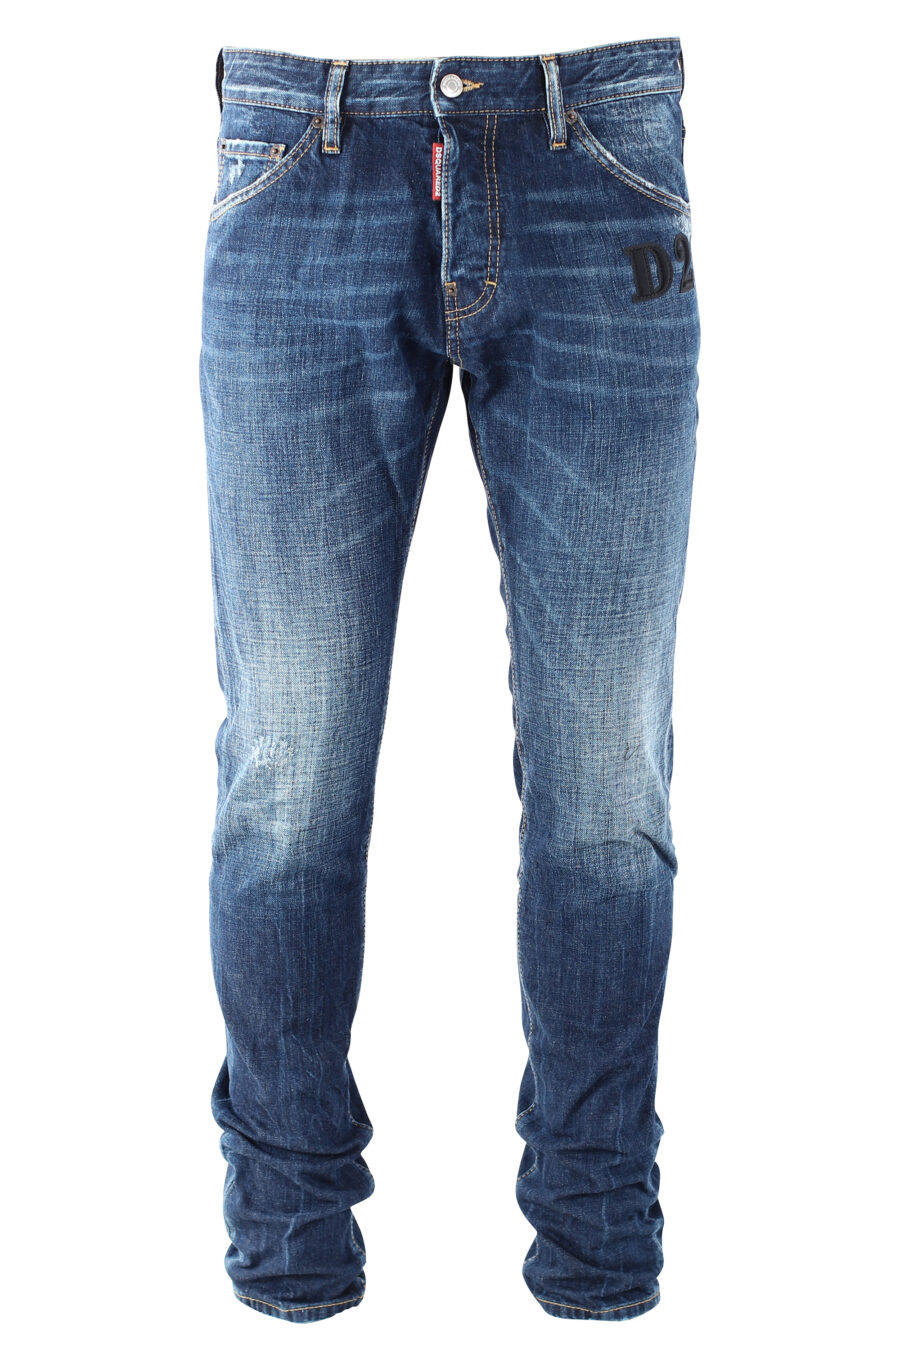 Jeans "cool guy jean" blau mit schwarzem "D2"-Logo - IMG 9686